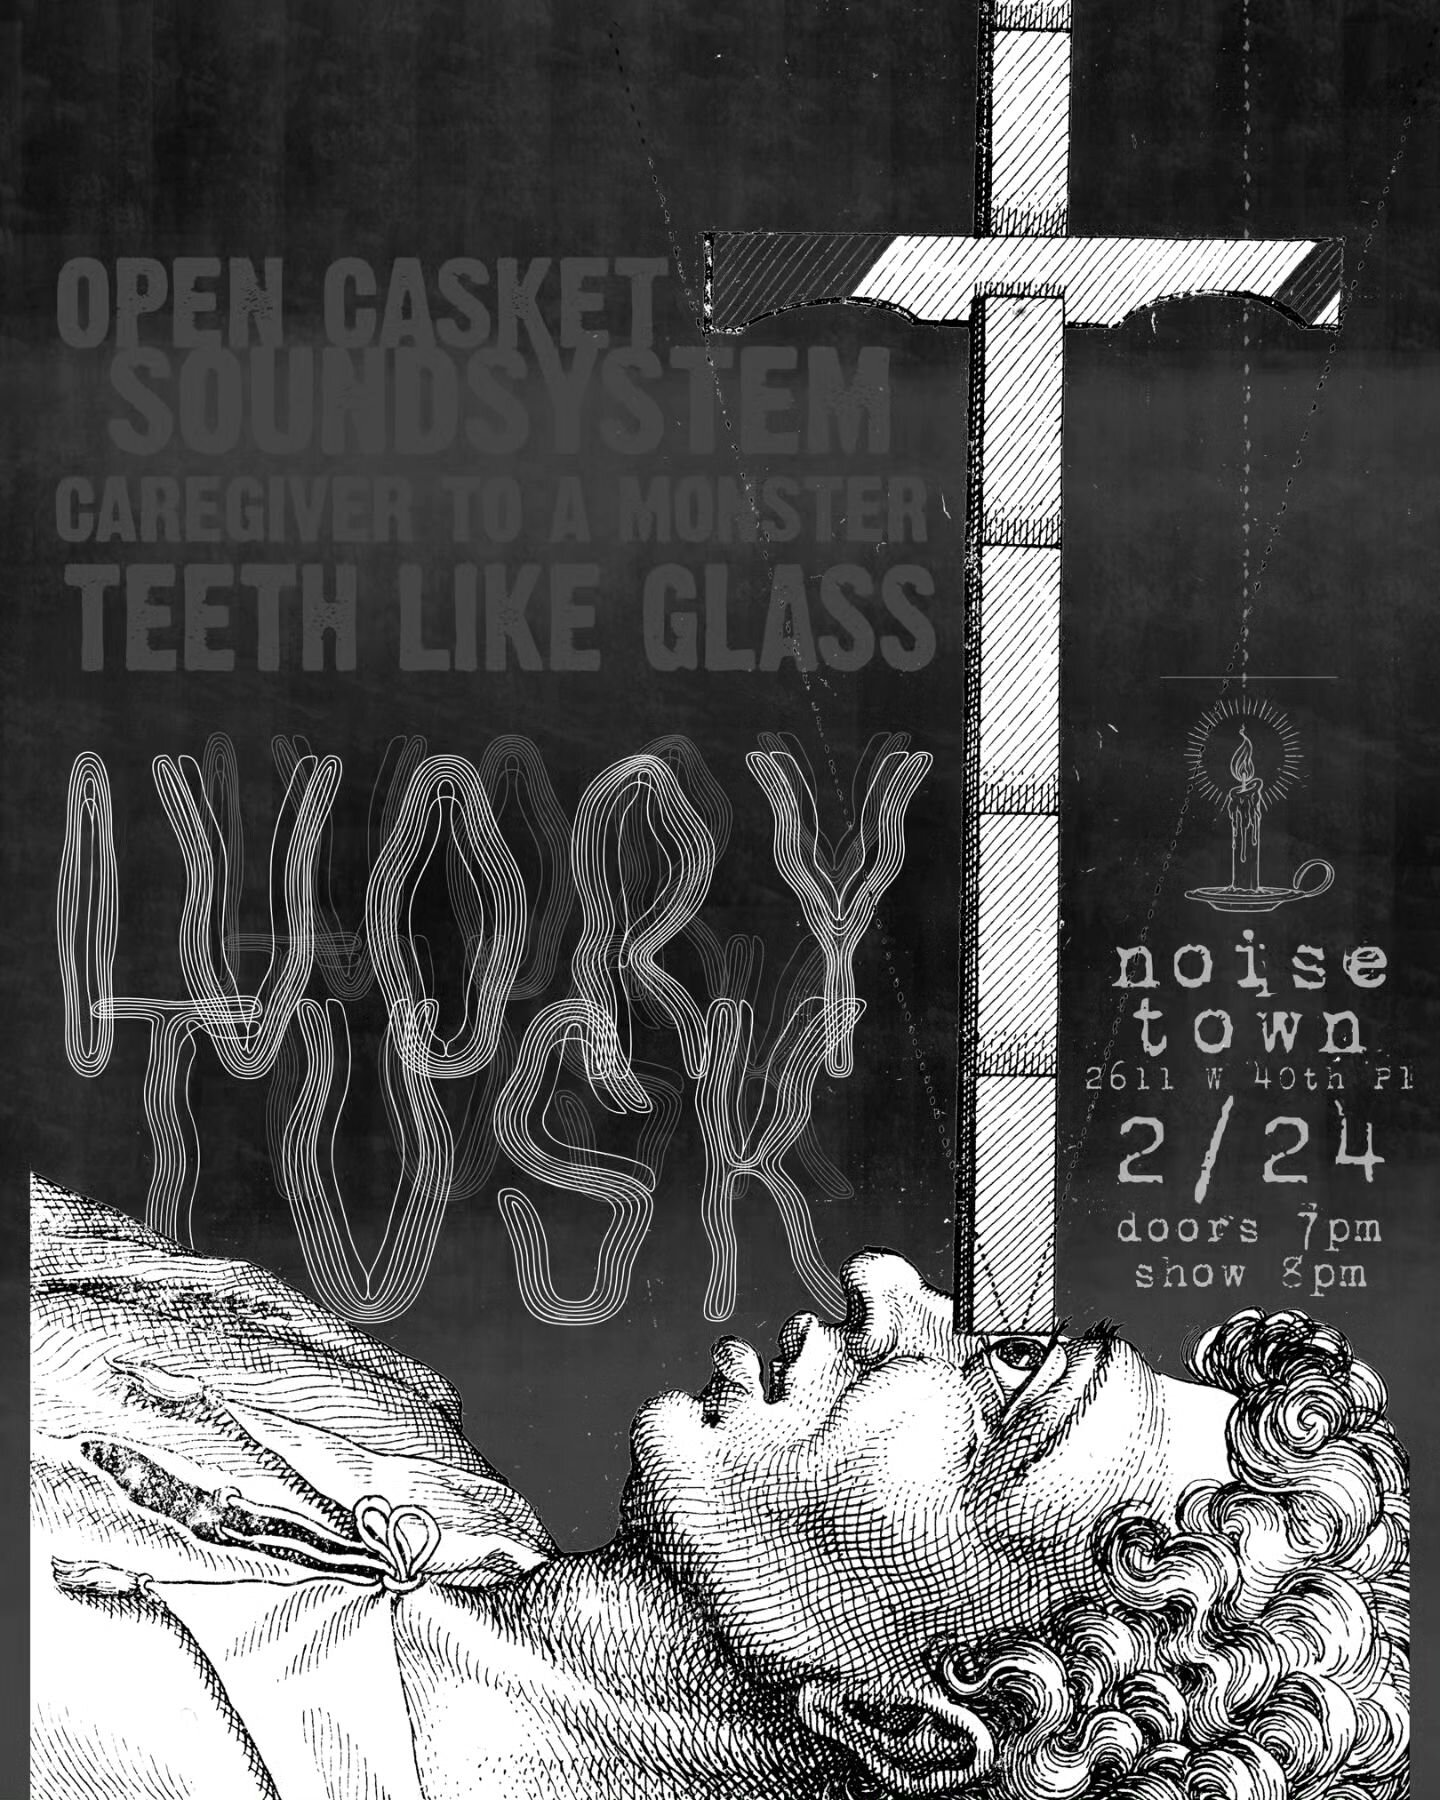 2/24 Noise Town Noise showww
@churchoftheivorytusk 
@teethlikeglass
Open Casket Soundsystem 
Caregiver To a Monster 
Doors at 7 
Show at 8
$10 tickets